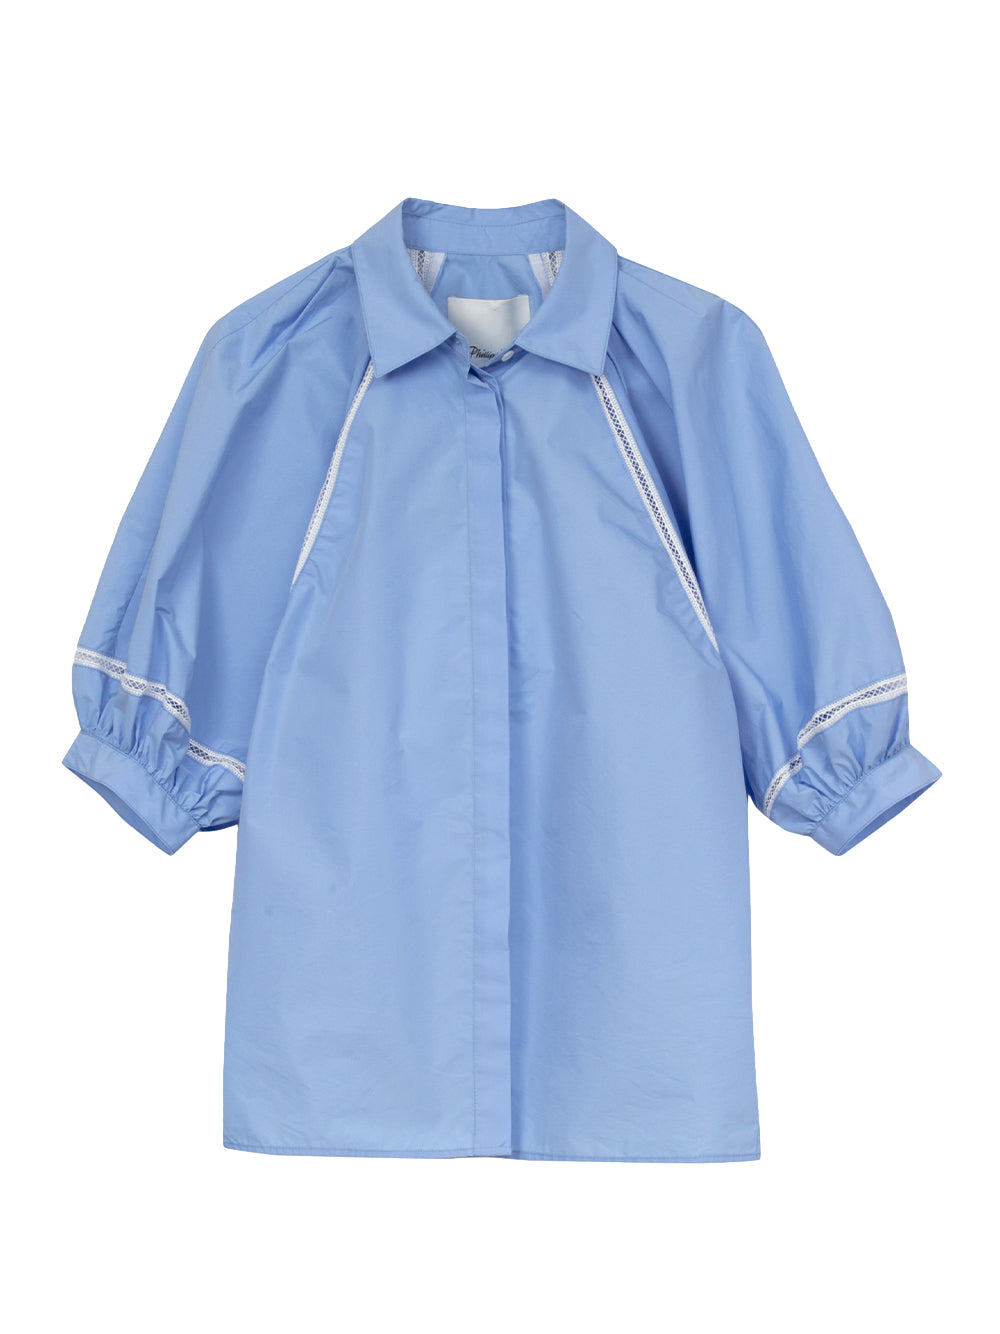 Lantern Sleeve Shirt With Lattice Trim (Oxford Blue)